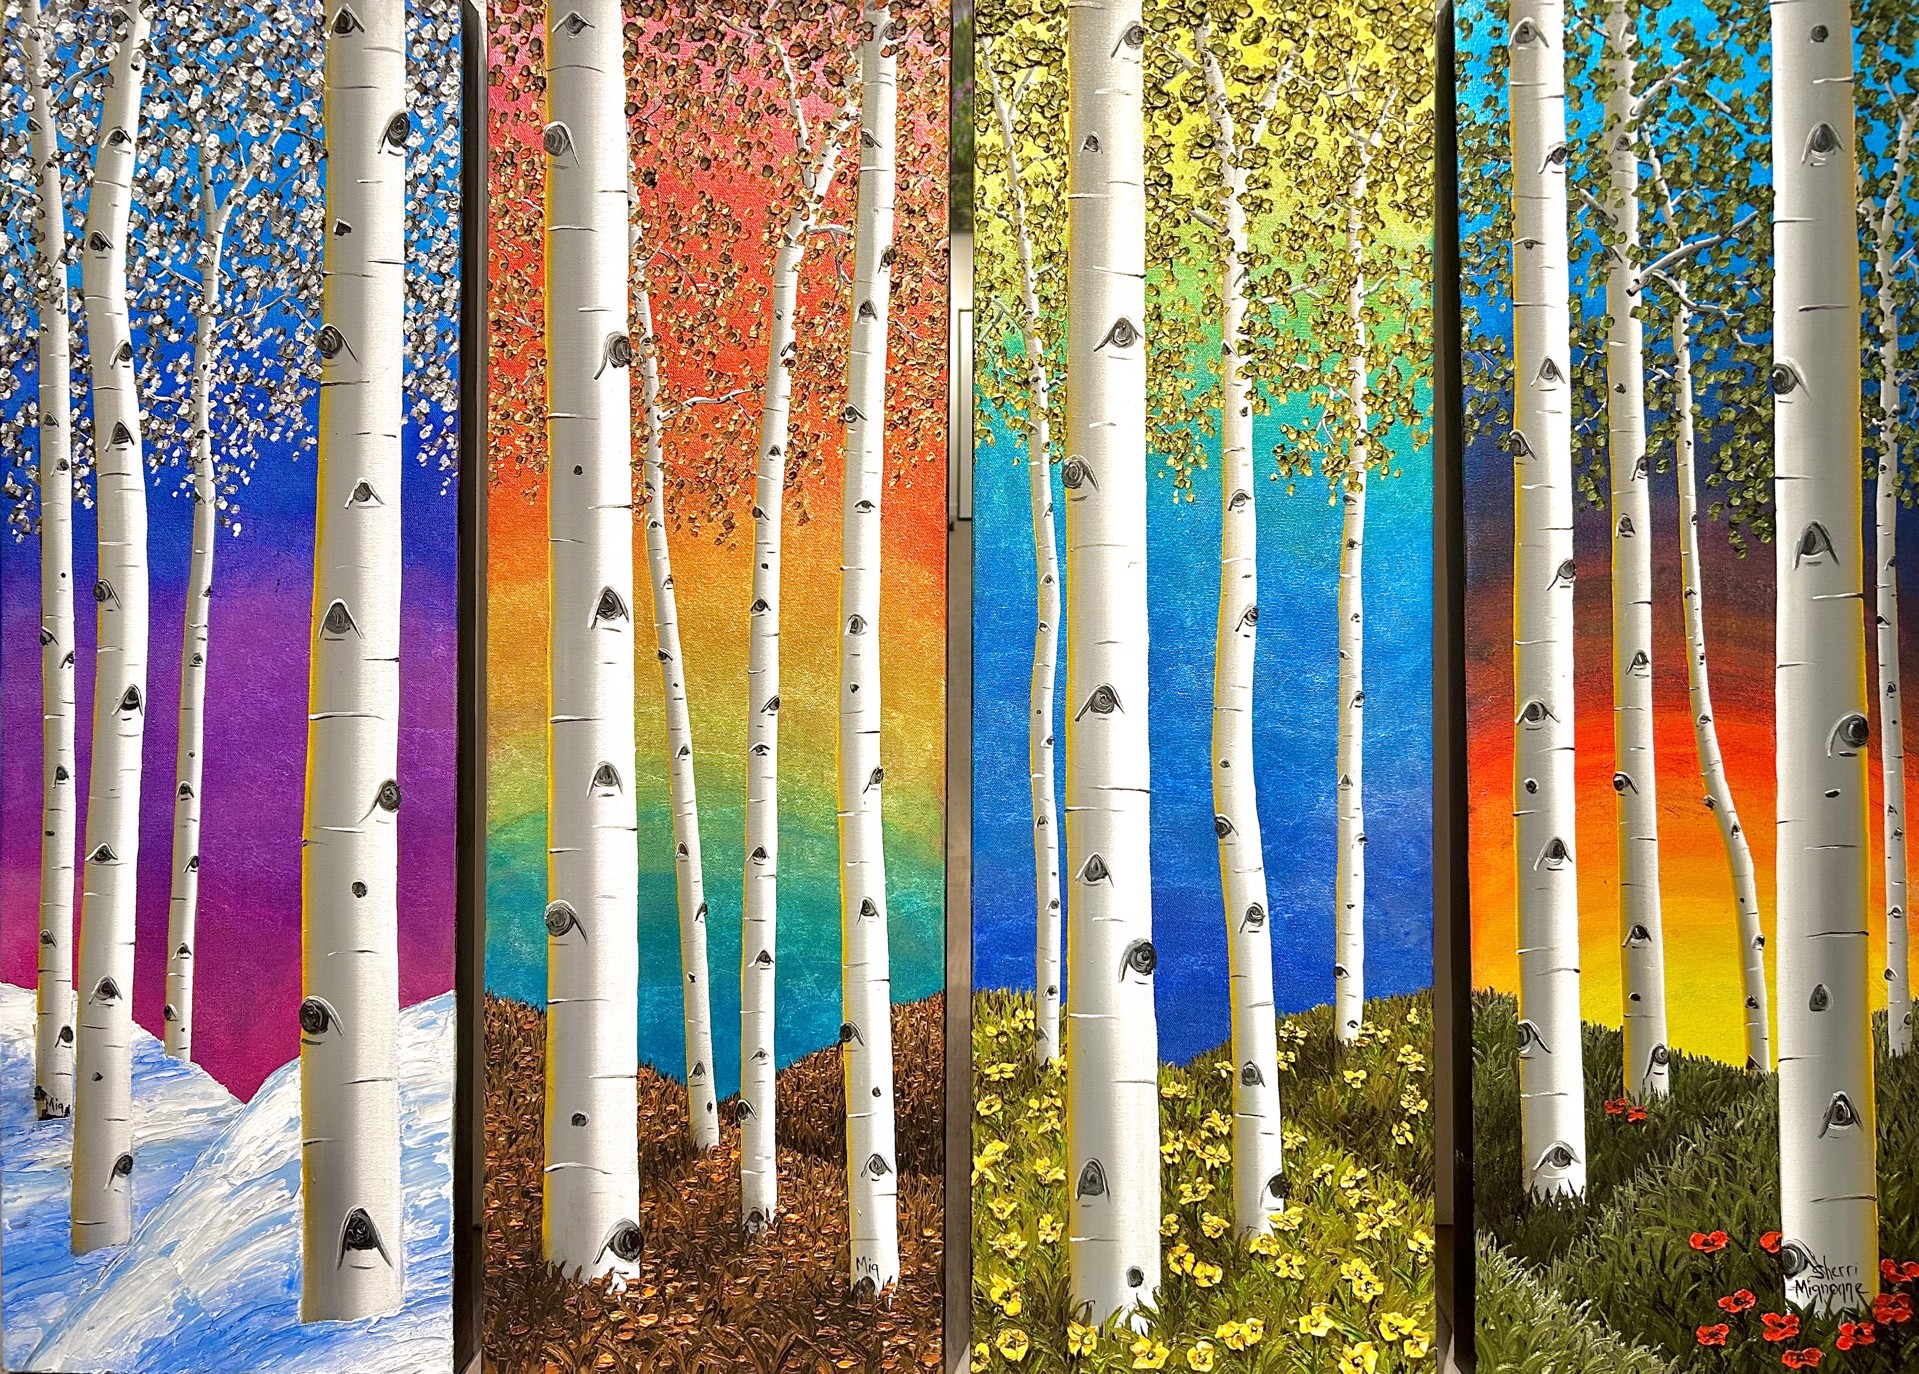 Seasons of Estes Park by Sherri Mignonne